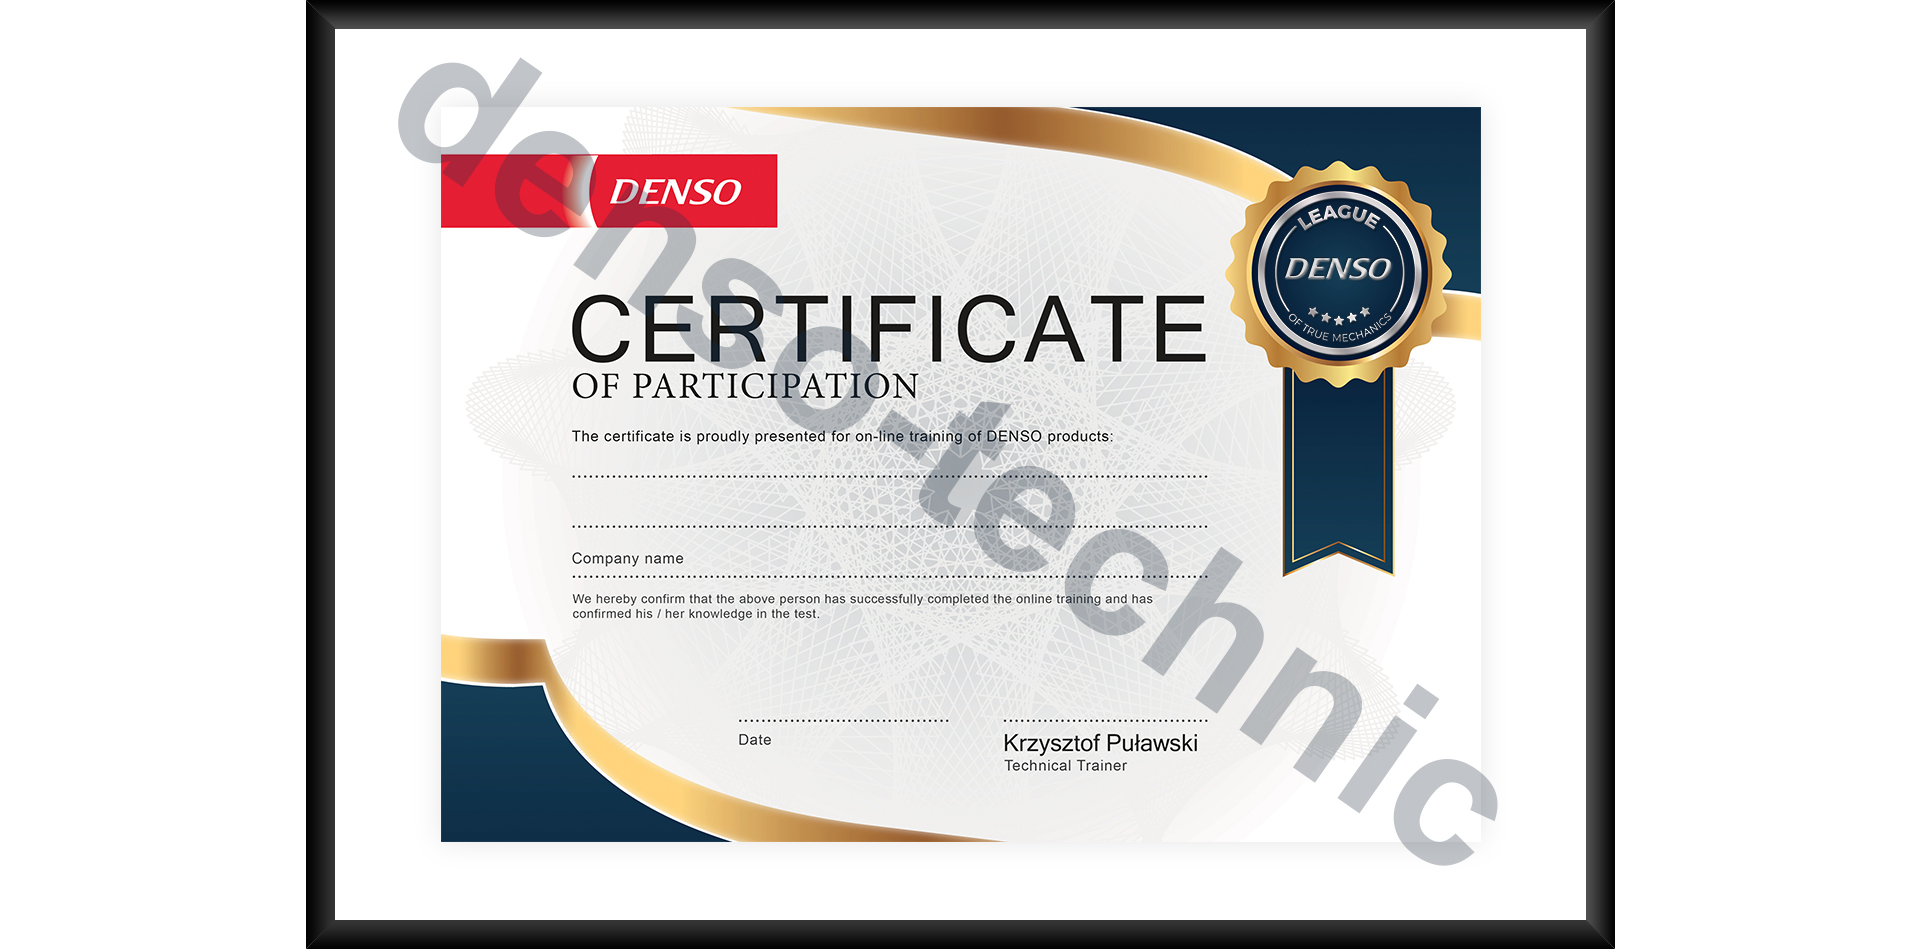 DENSO - Certificate